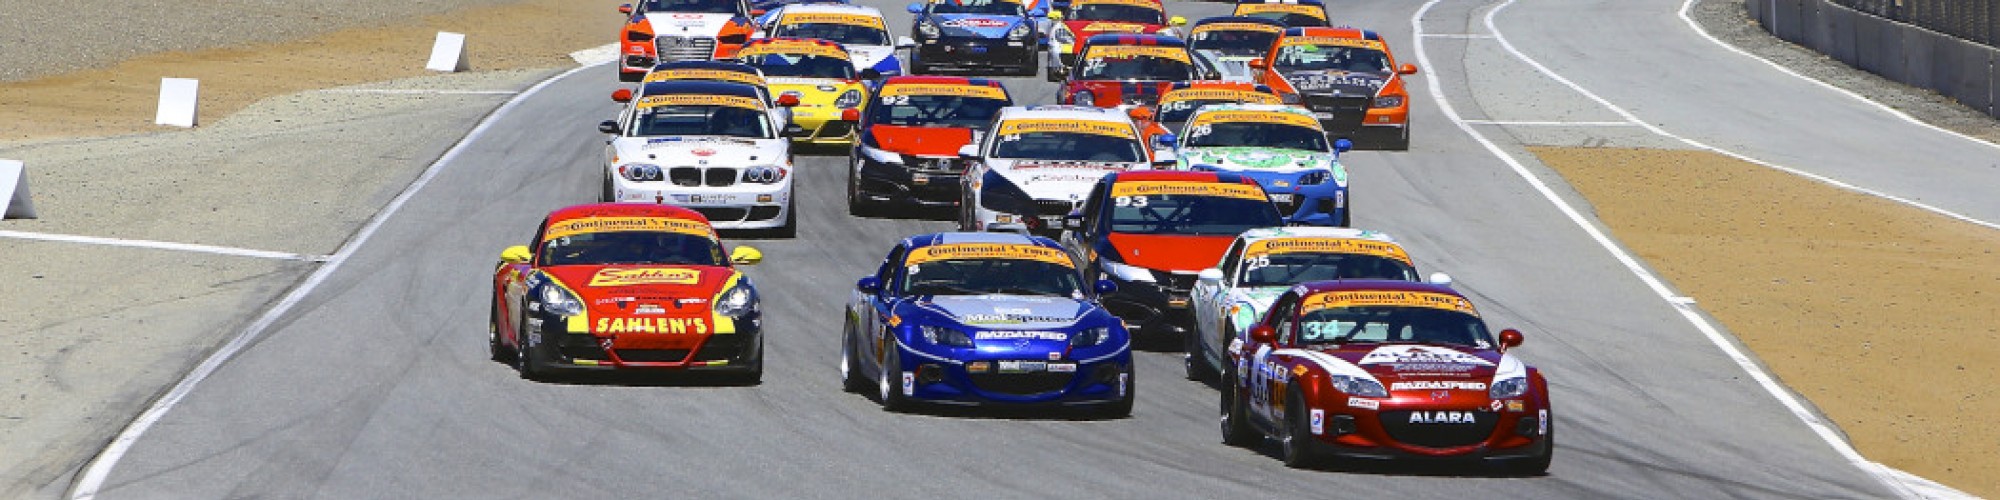 Laguna Seca Raceway cover image